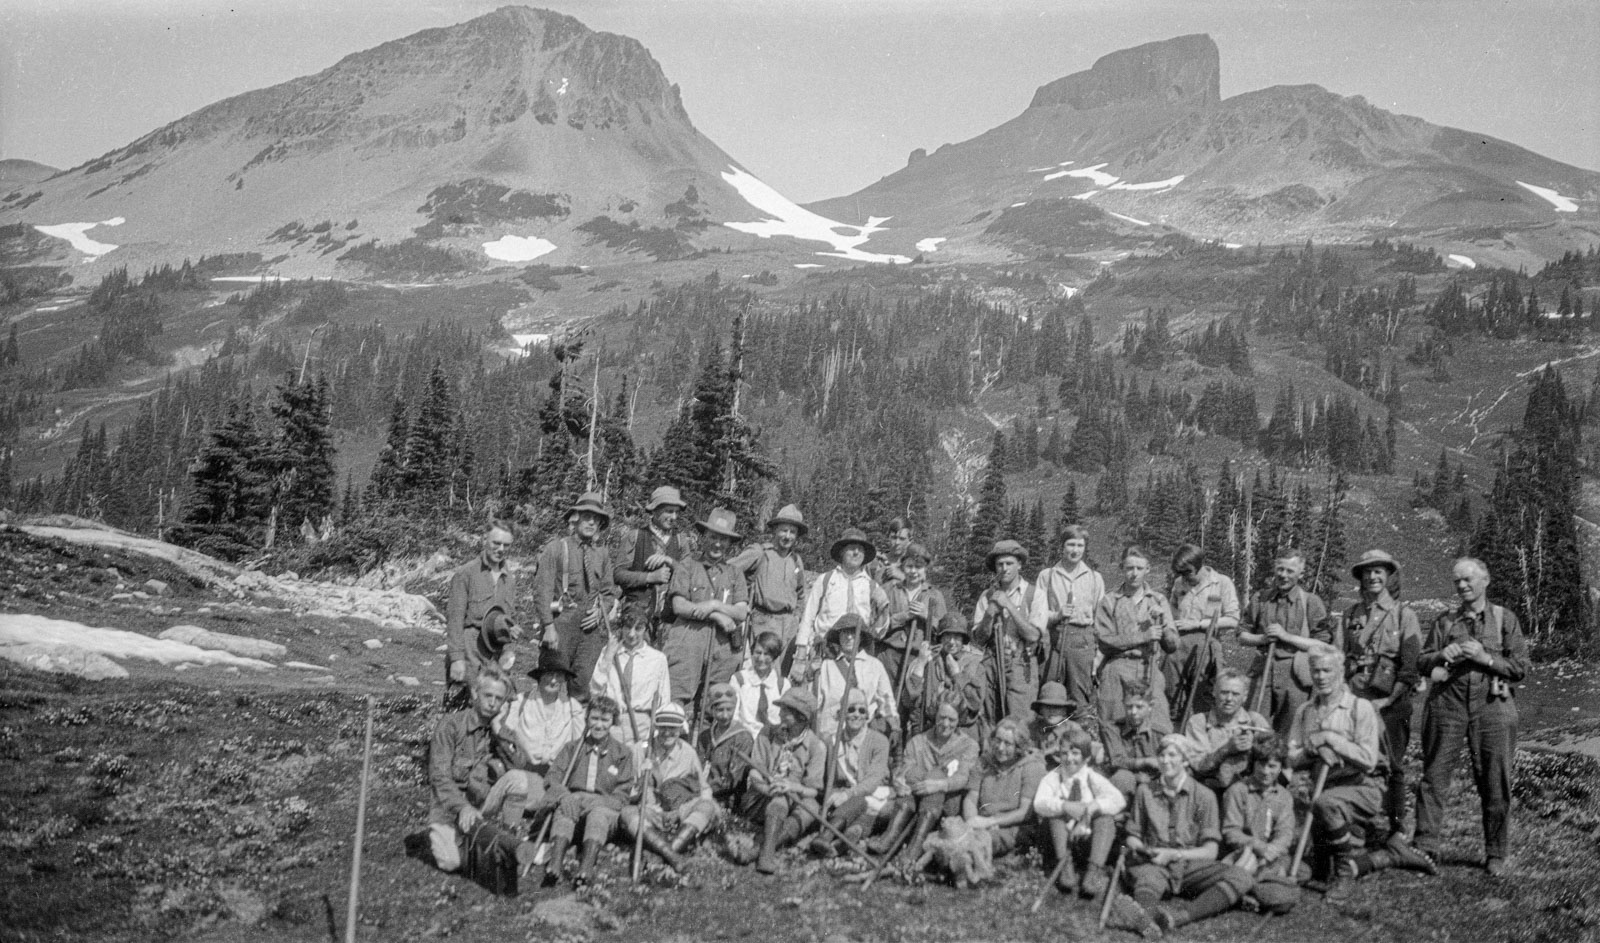 1927 - 1931 - Hiking group gathered together